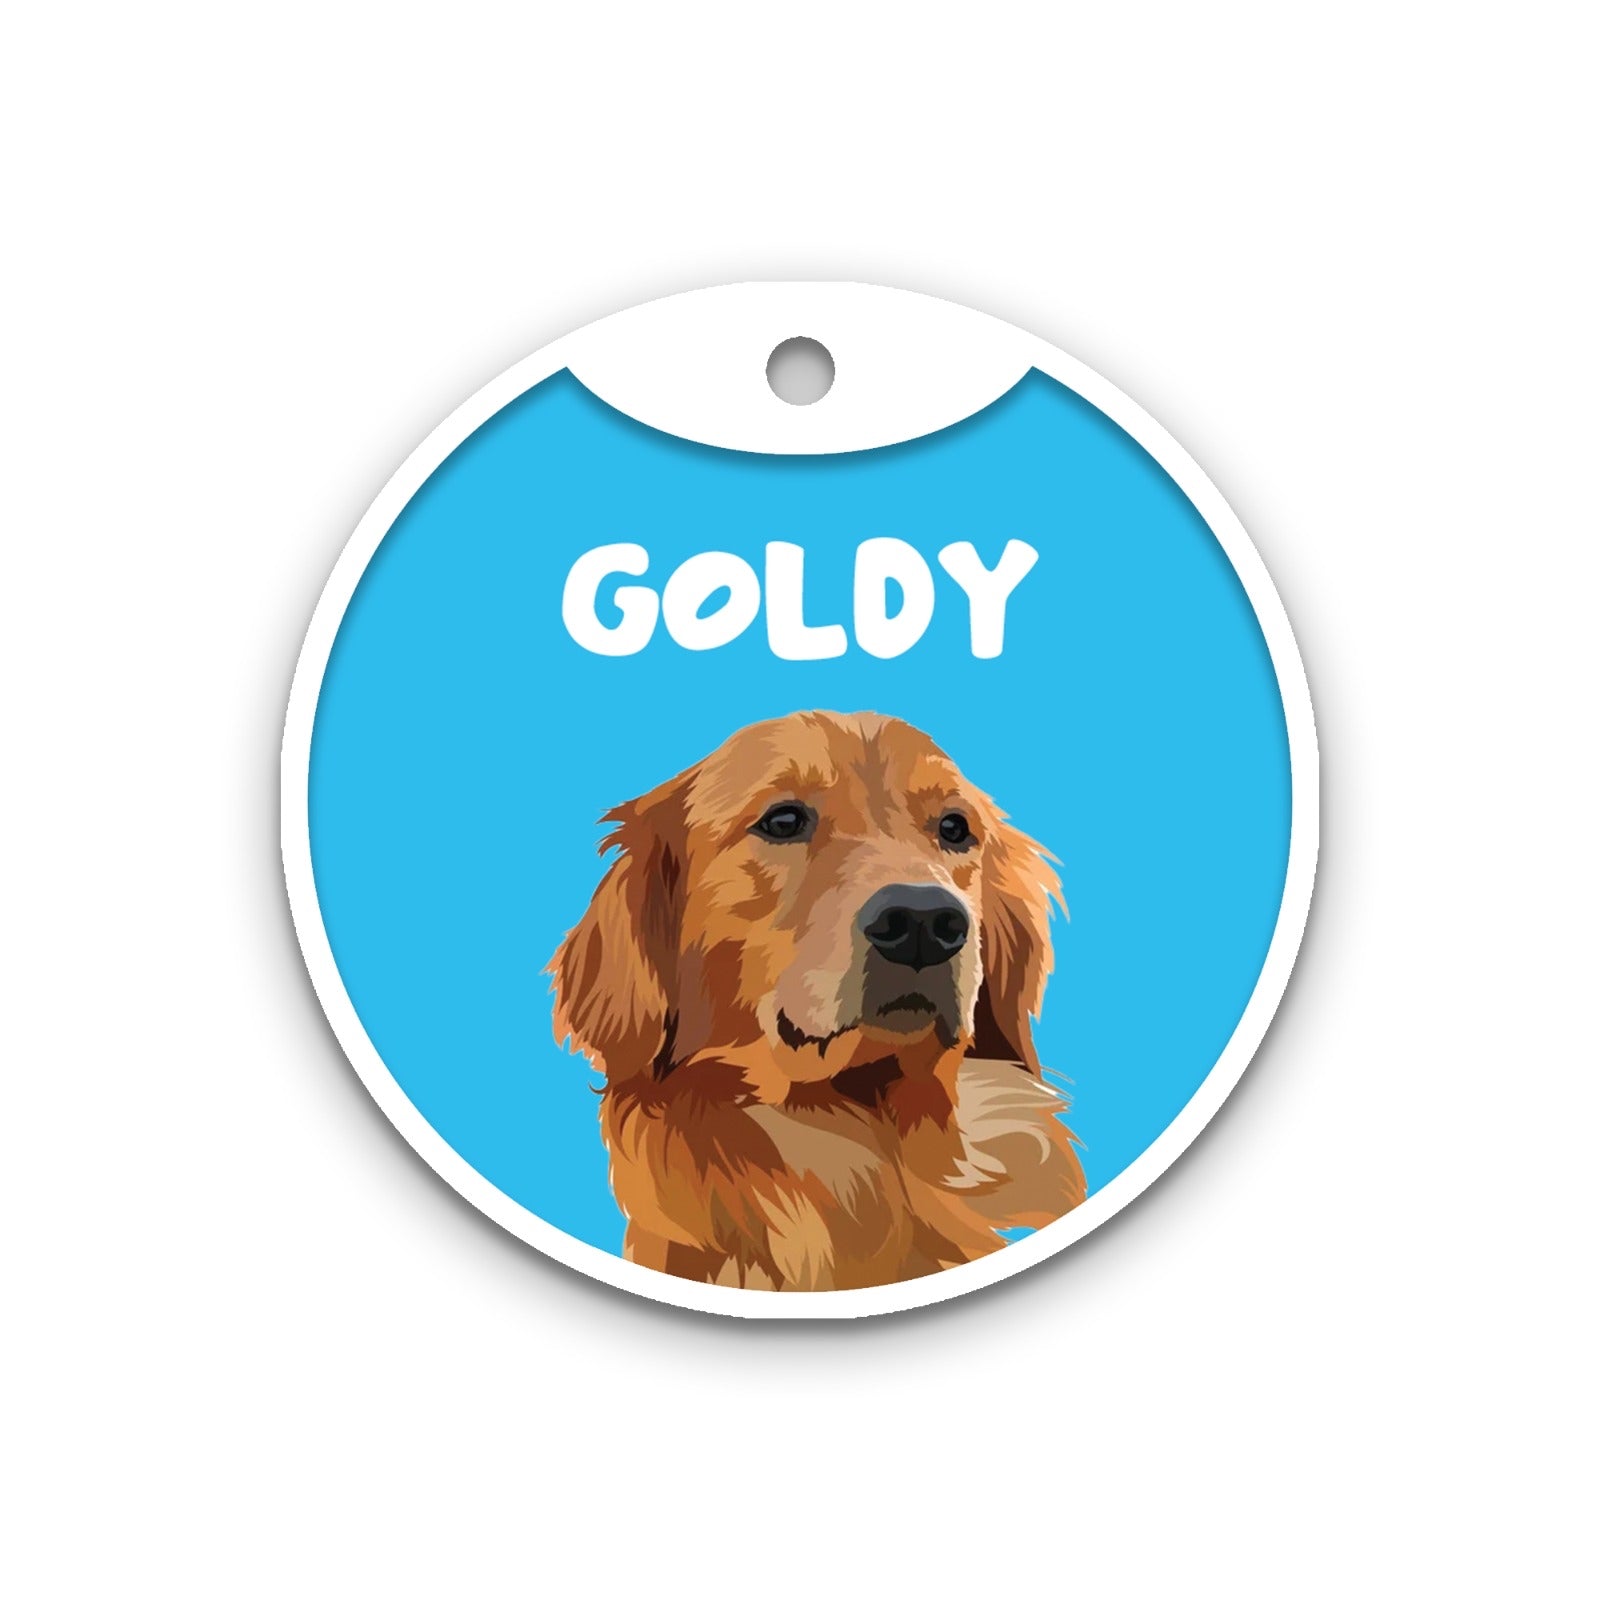 Customized Dog Id Tags - Golden Retriever